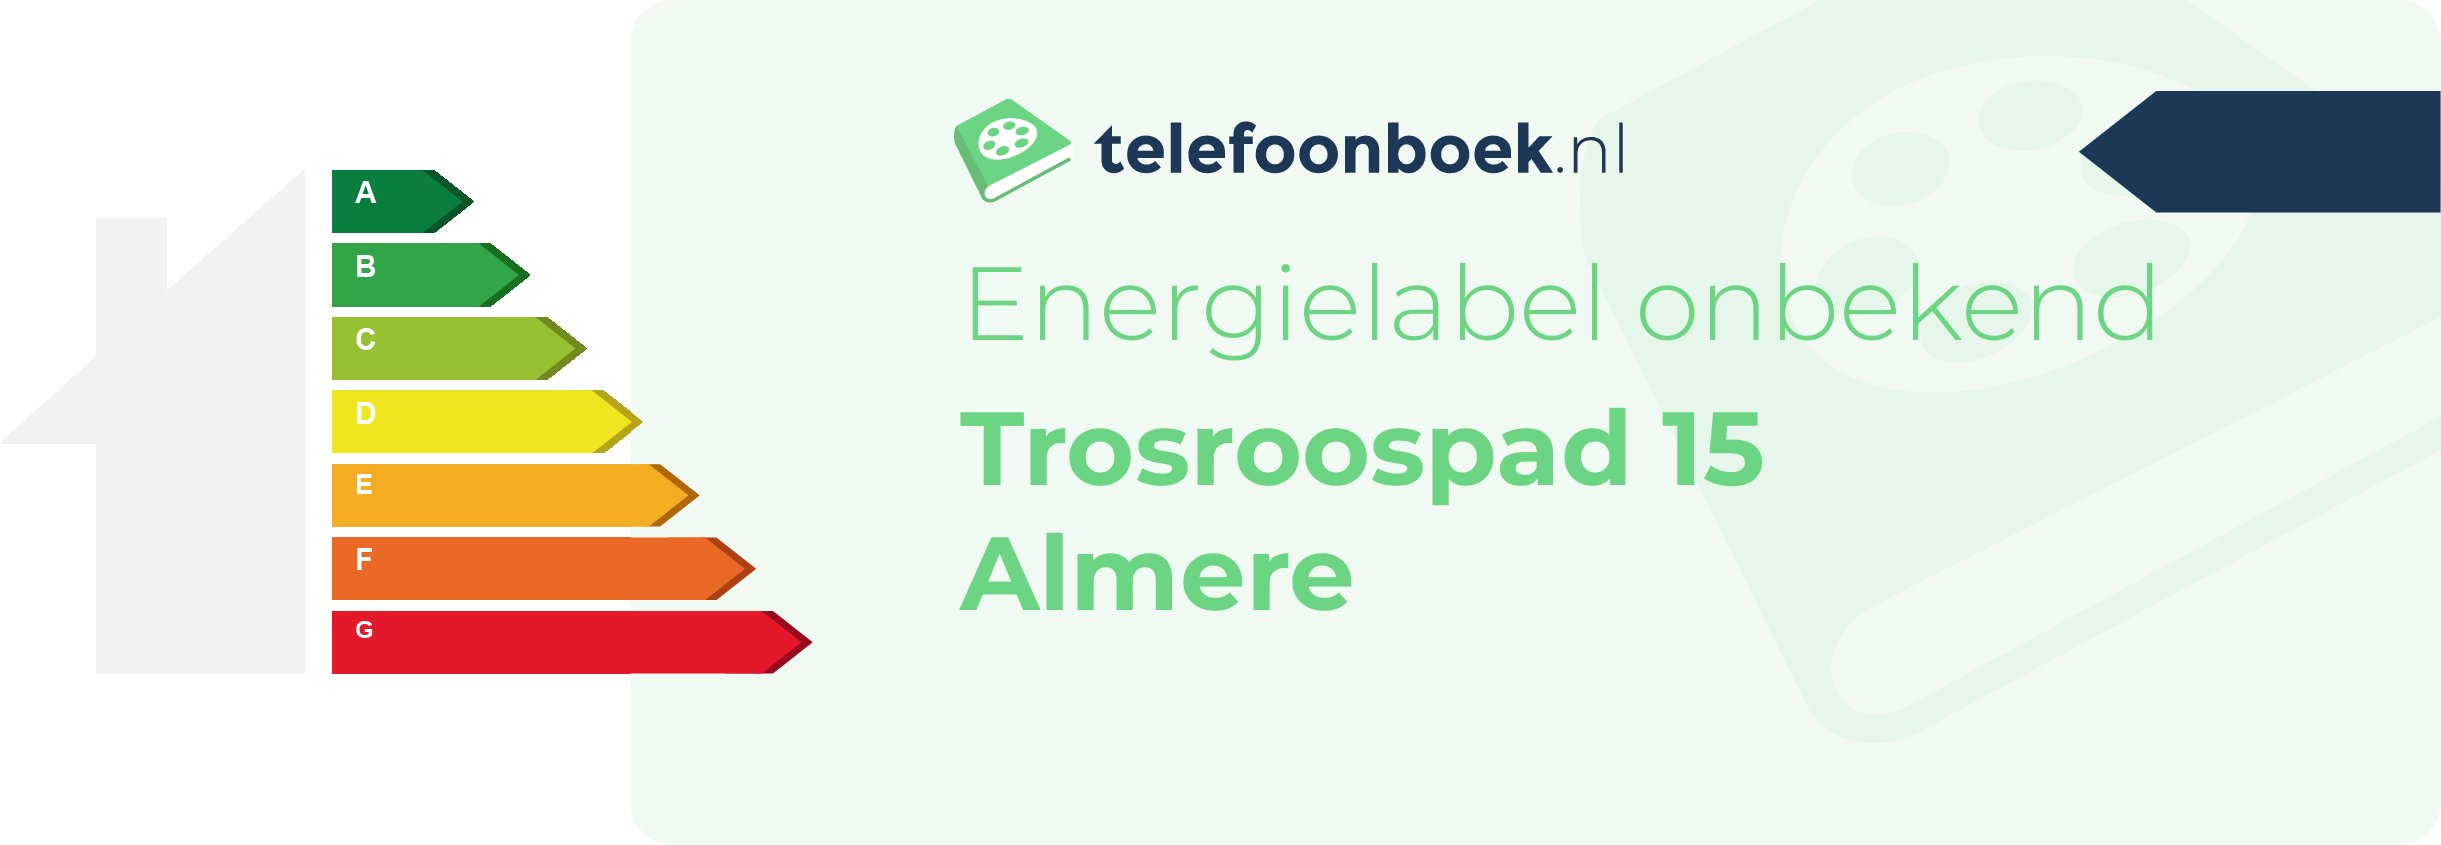 Energielabel Trosroospad 15 Almere